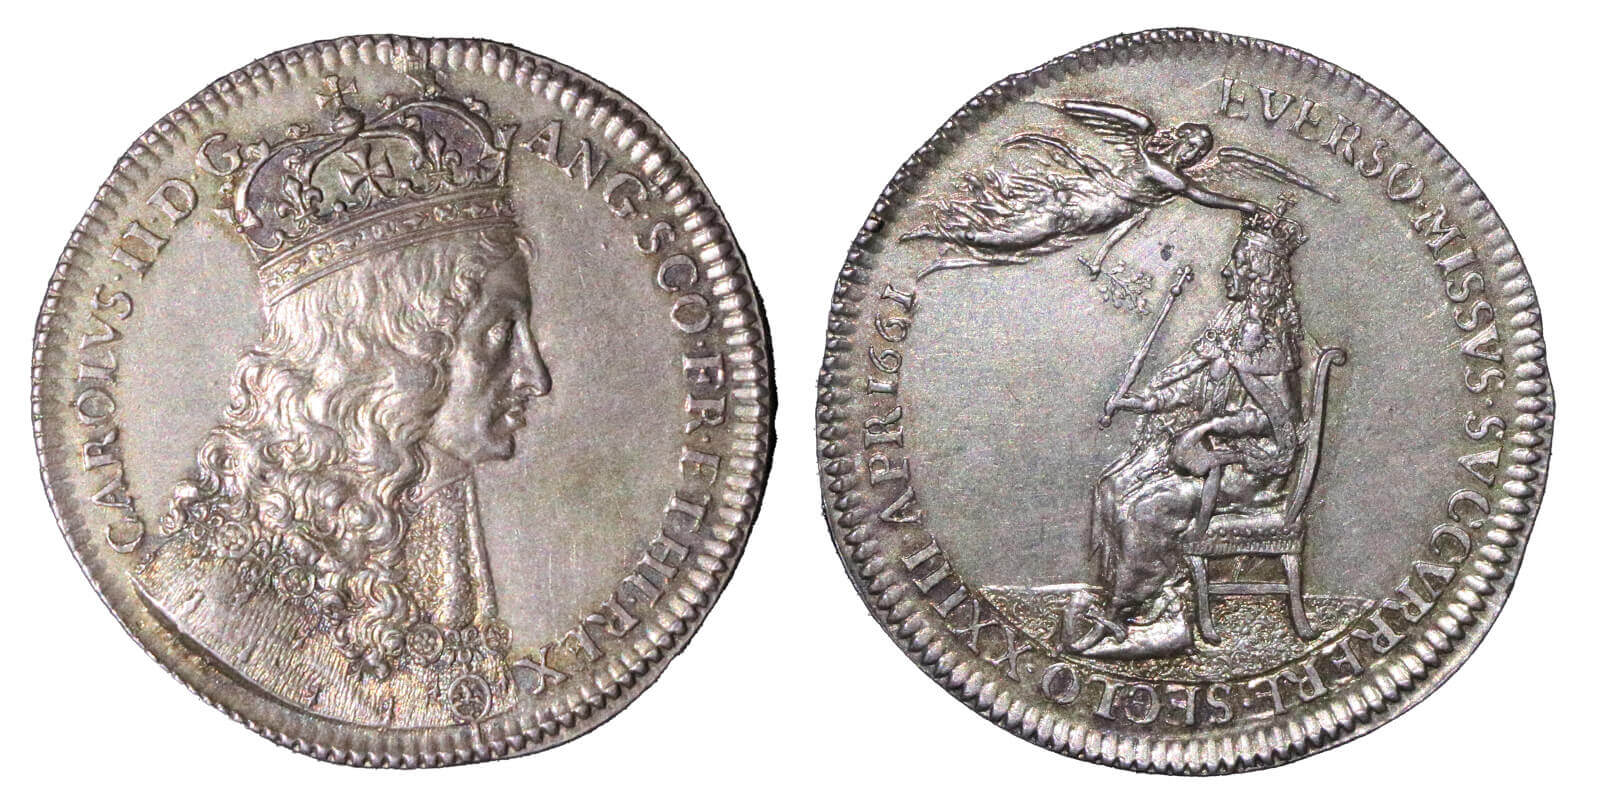 Charles II coronation medal.jpg